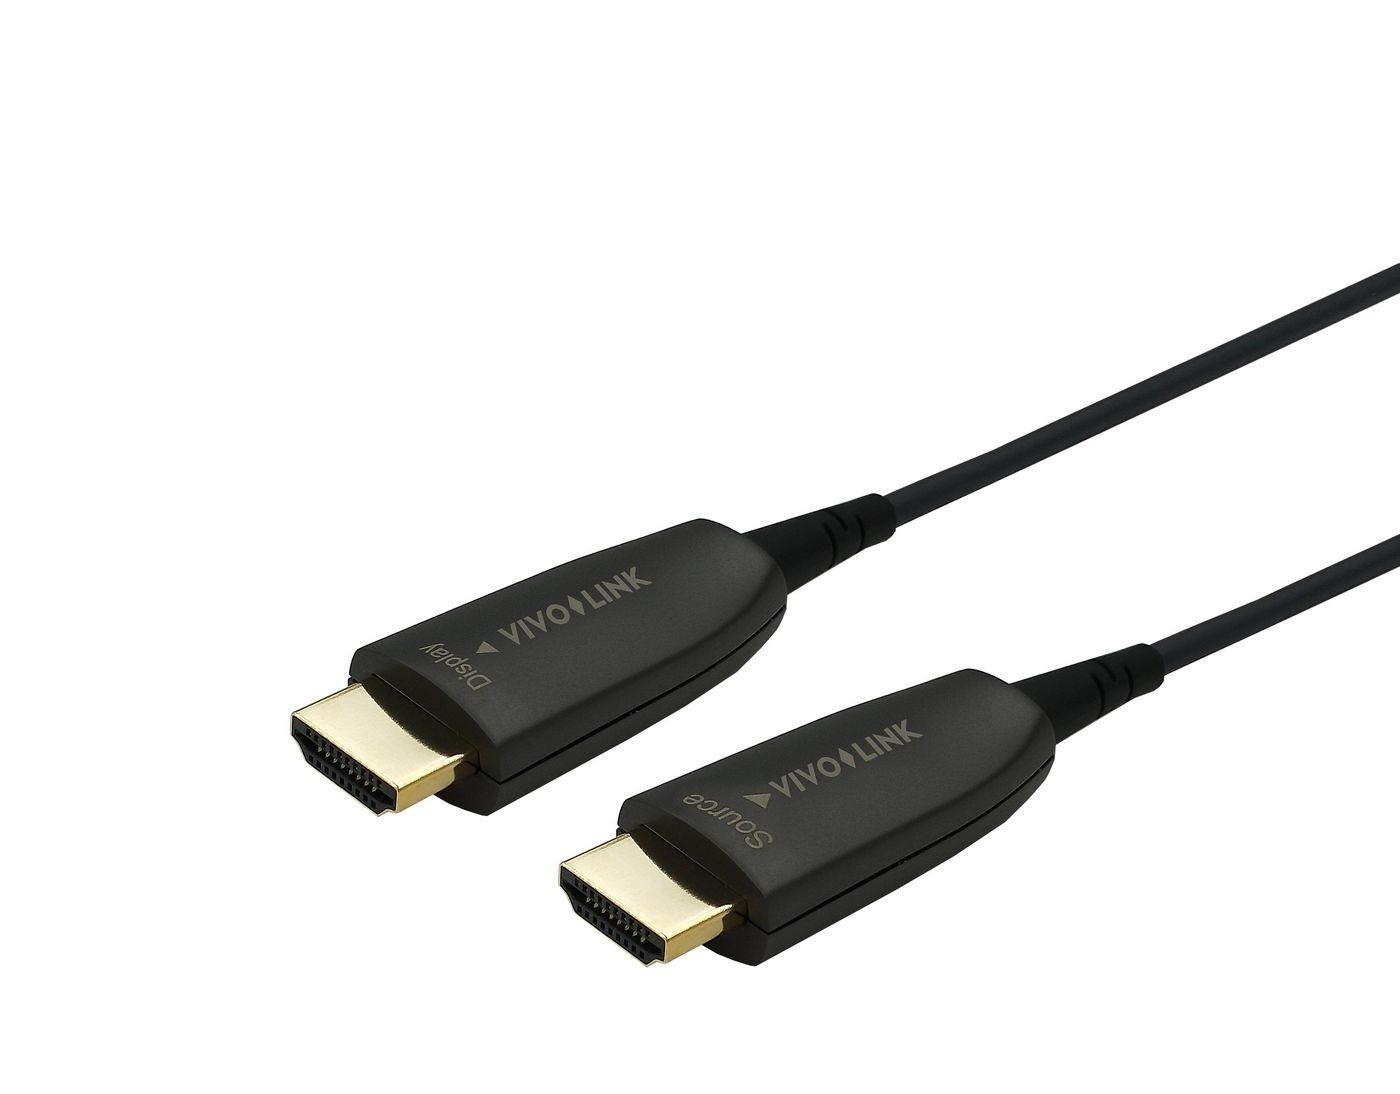 Vivolink Prohdmiop8k7.5 Hdmi Cable 7.5 M Hdmi Type A [Standard] Black (Optic Hdmi 8K Cable 7.5 Meter - Warranty: 144M)